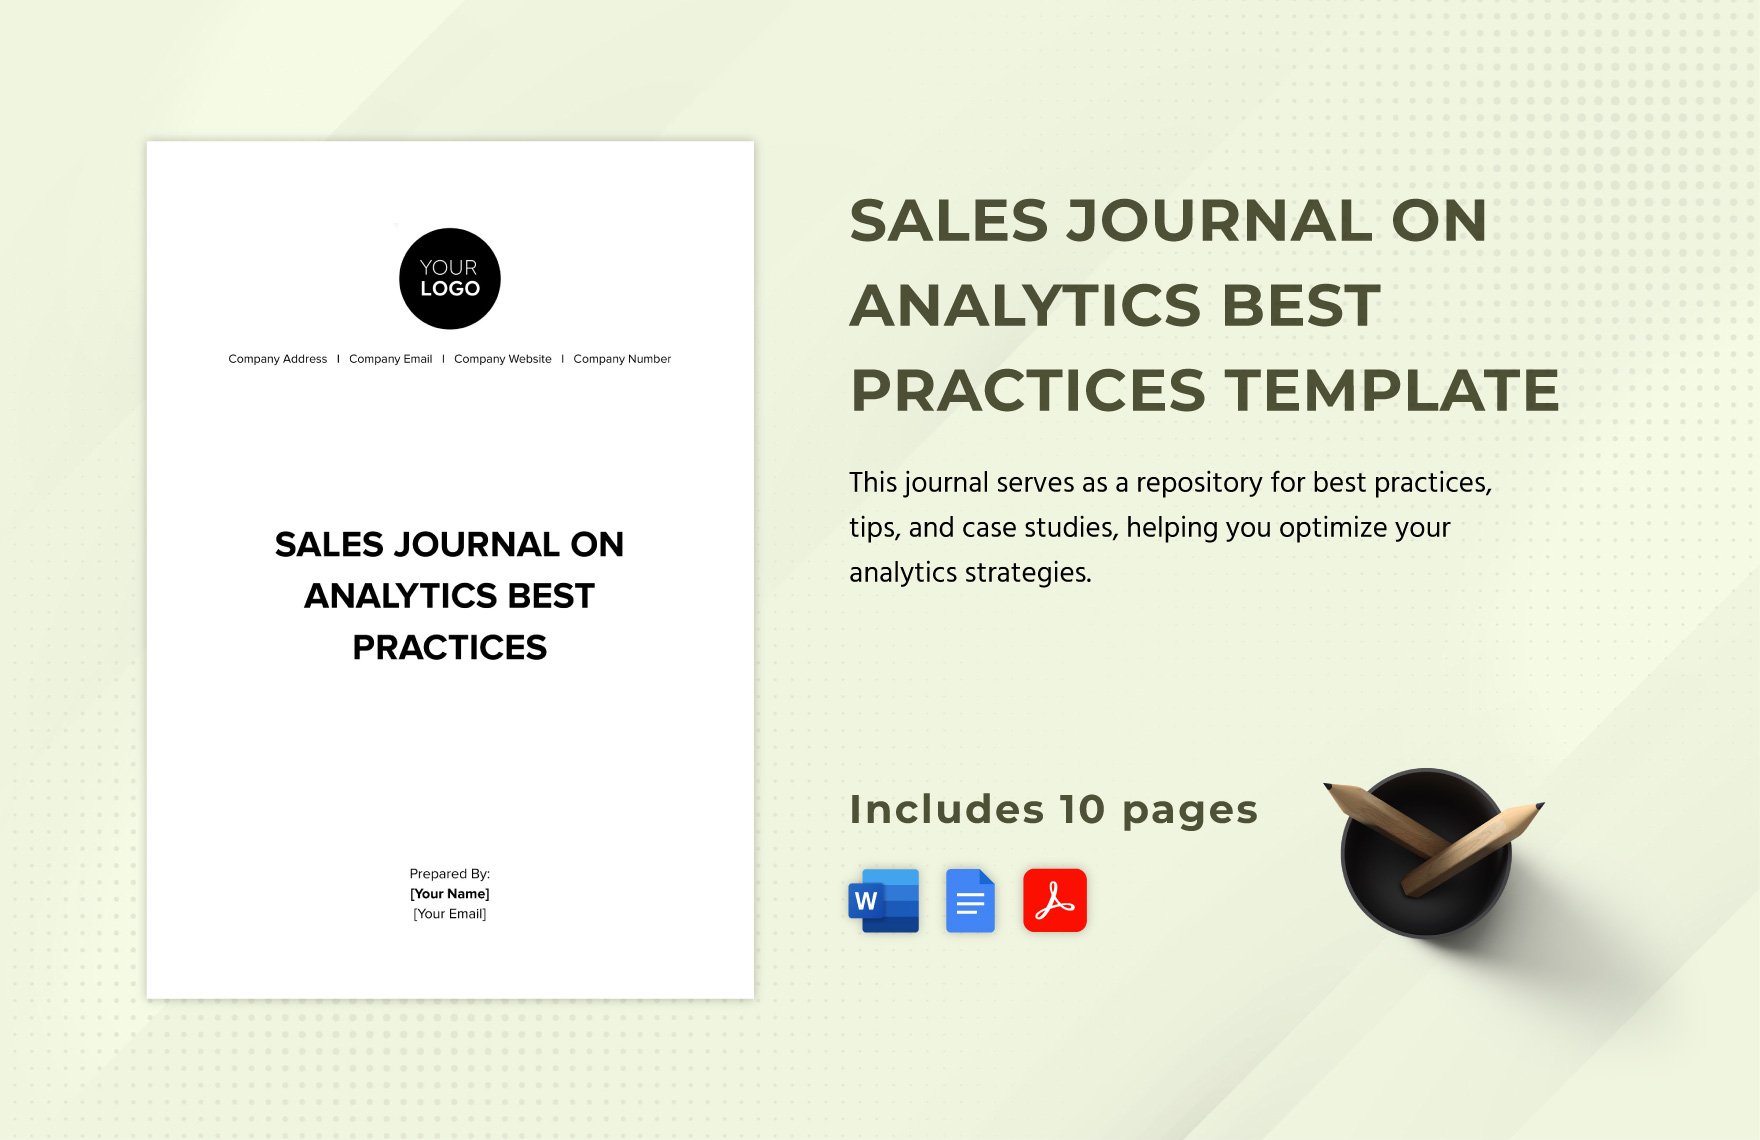 Sales Journal on Analytics Best Practices Template